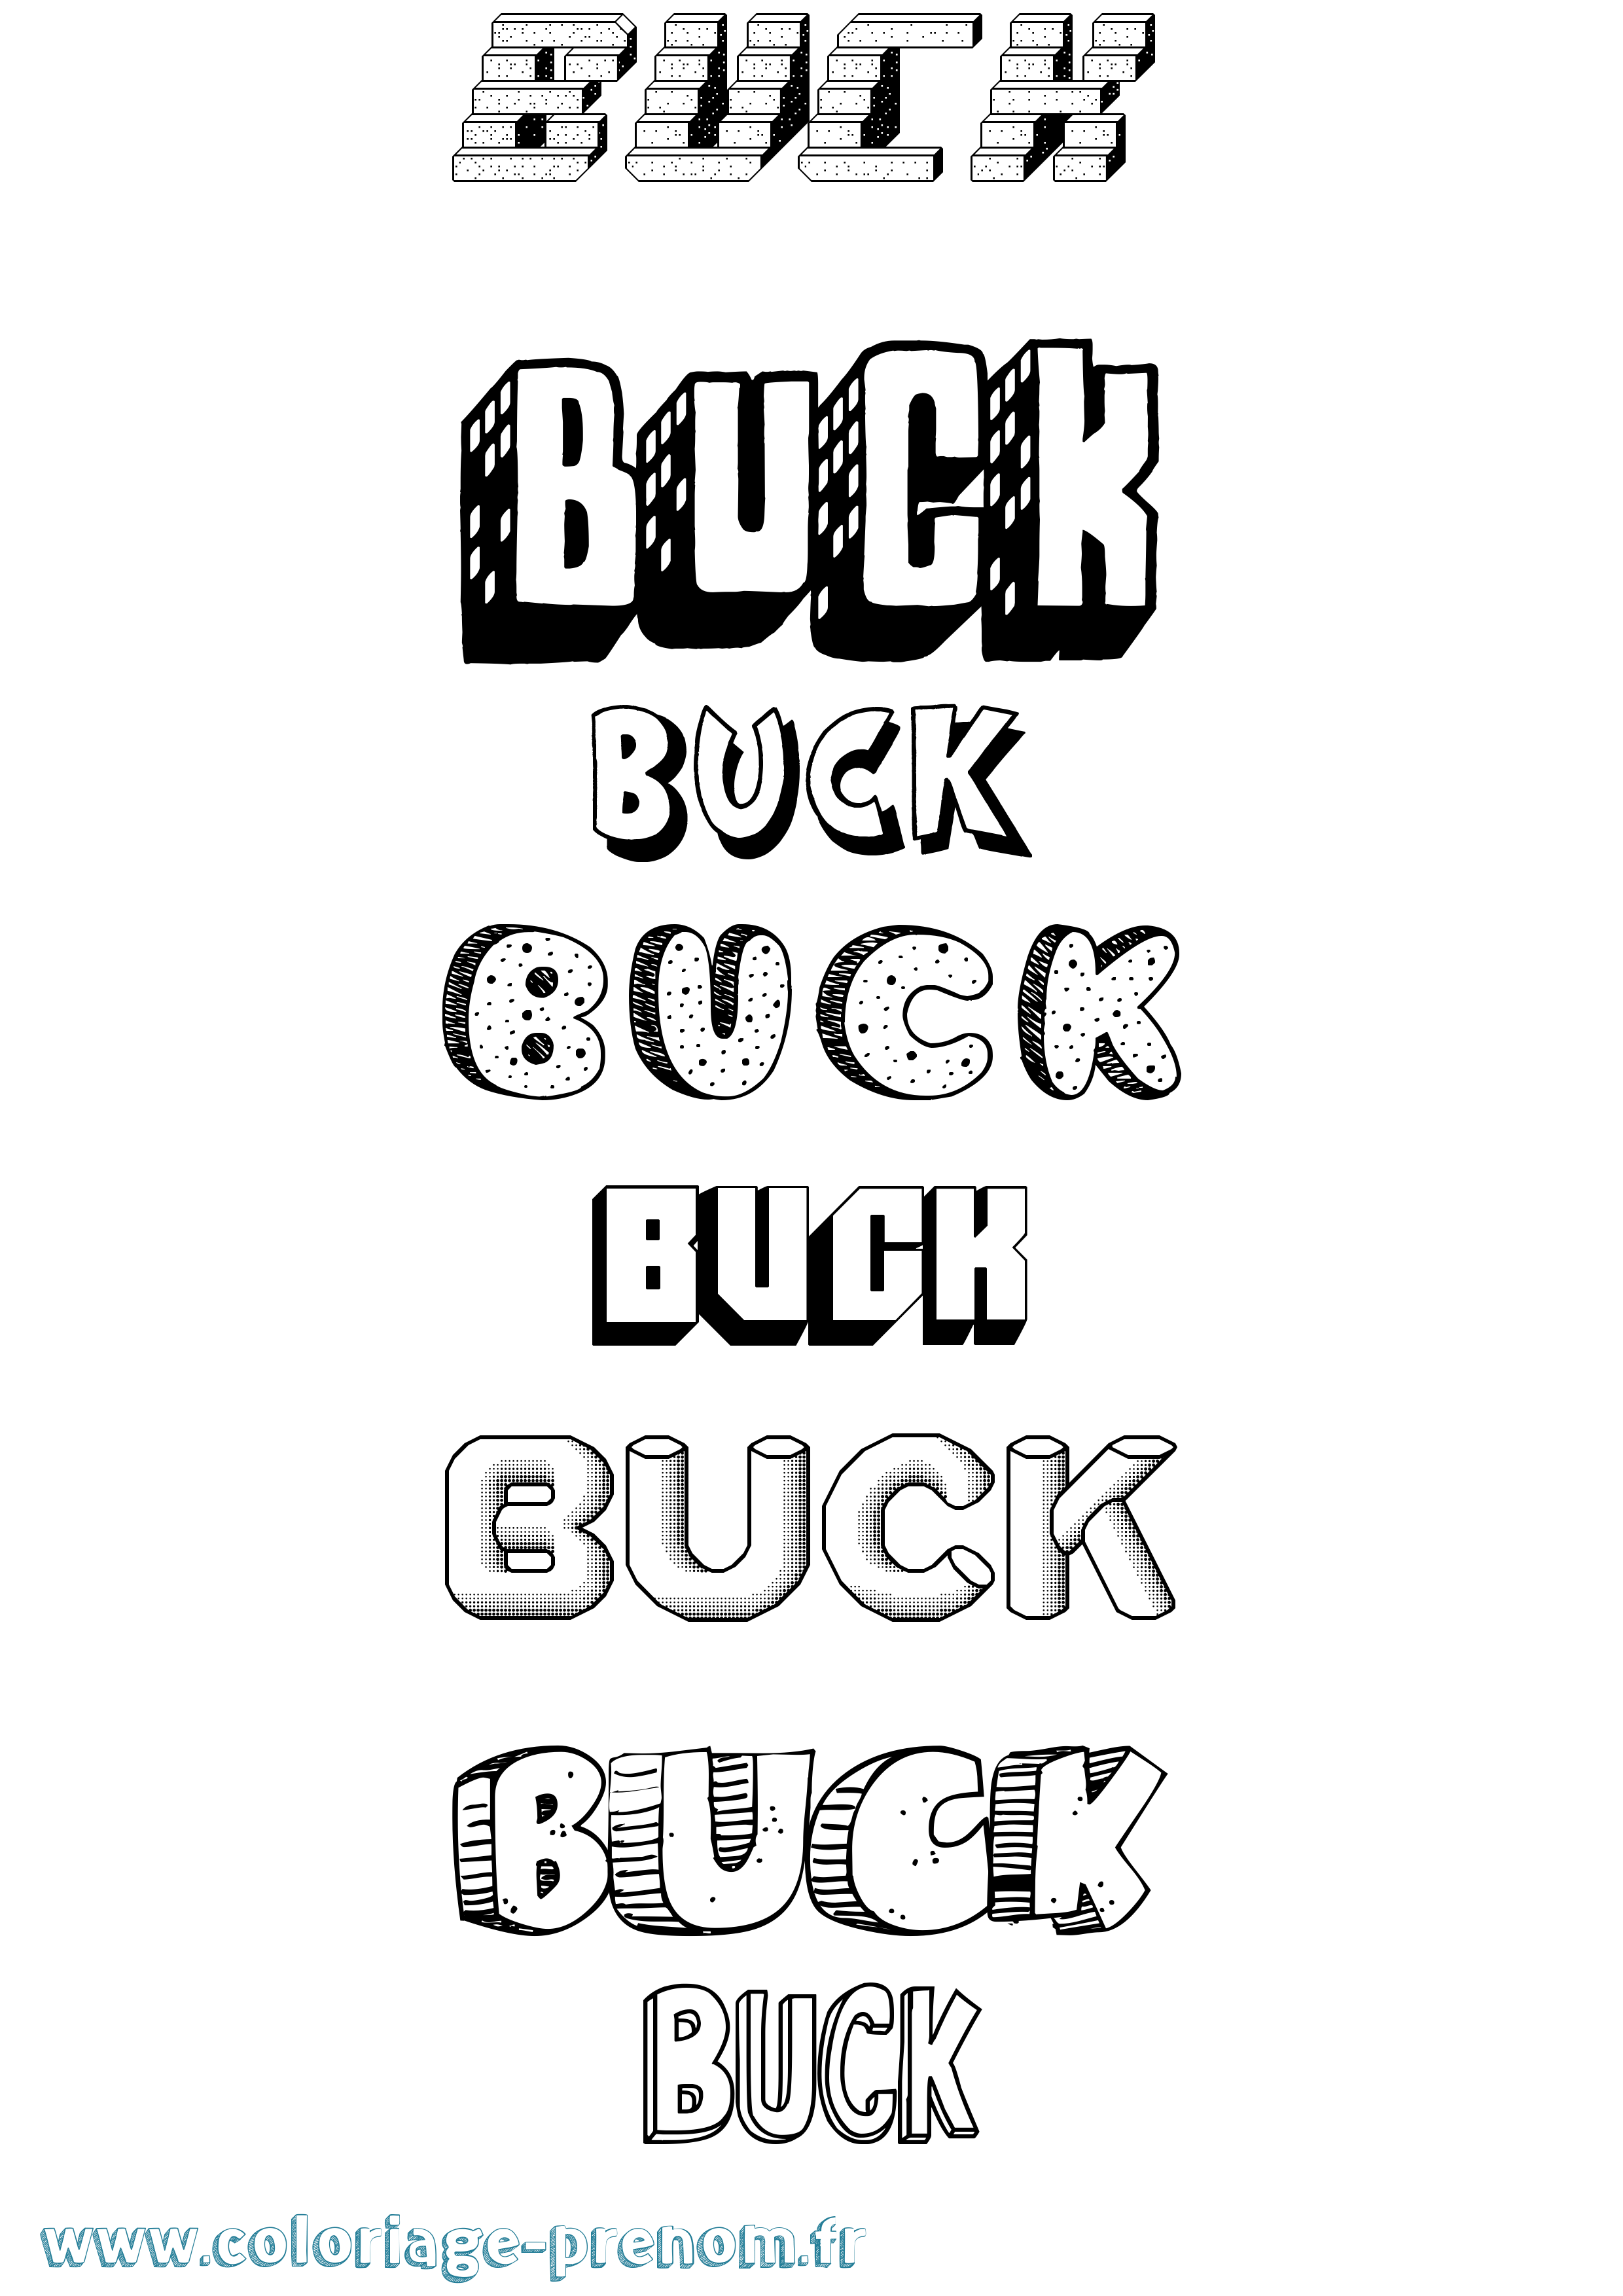 Coloriage prénom Buck Effet 3D